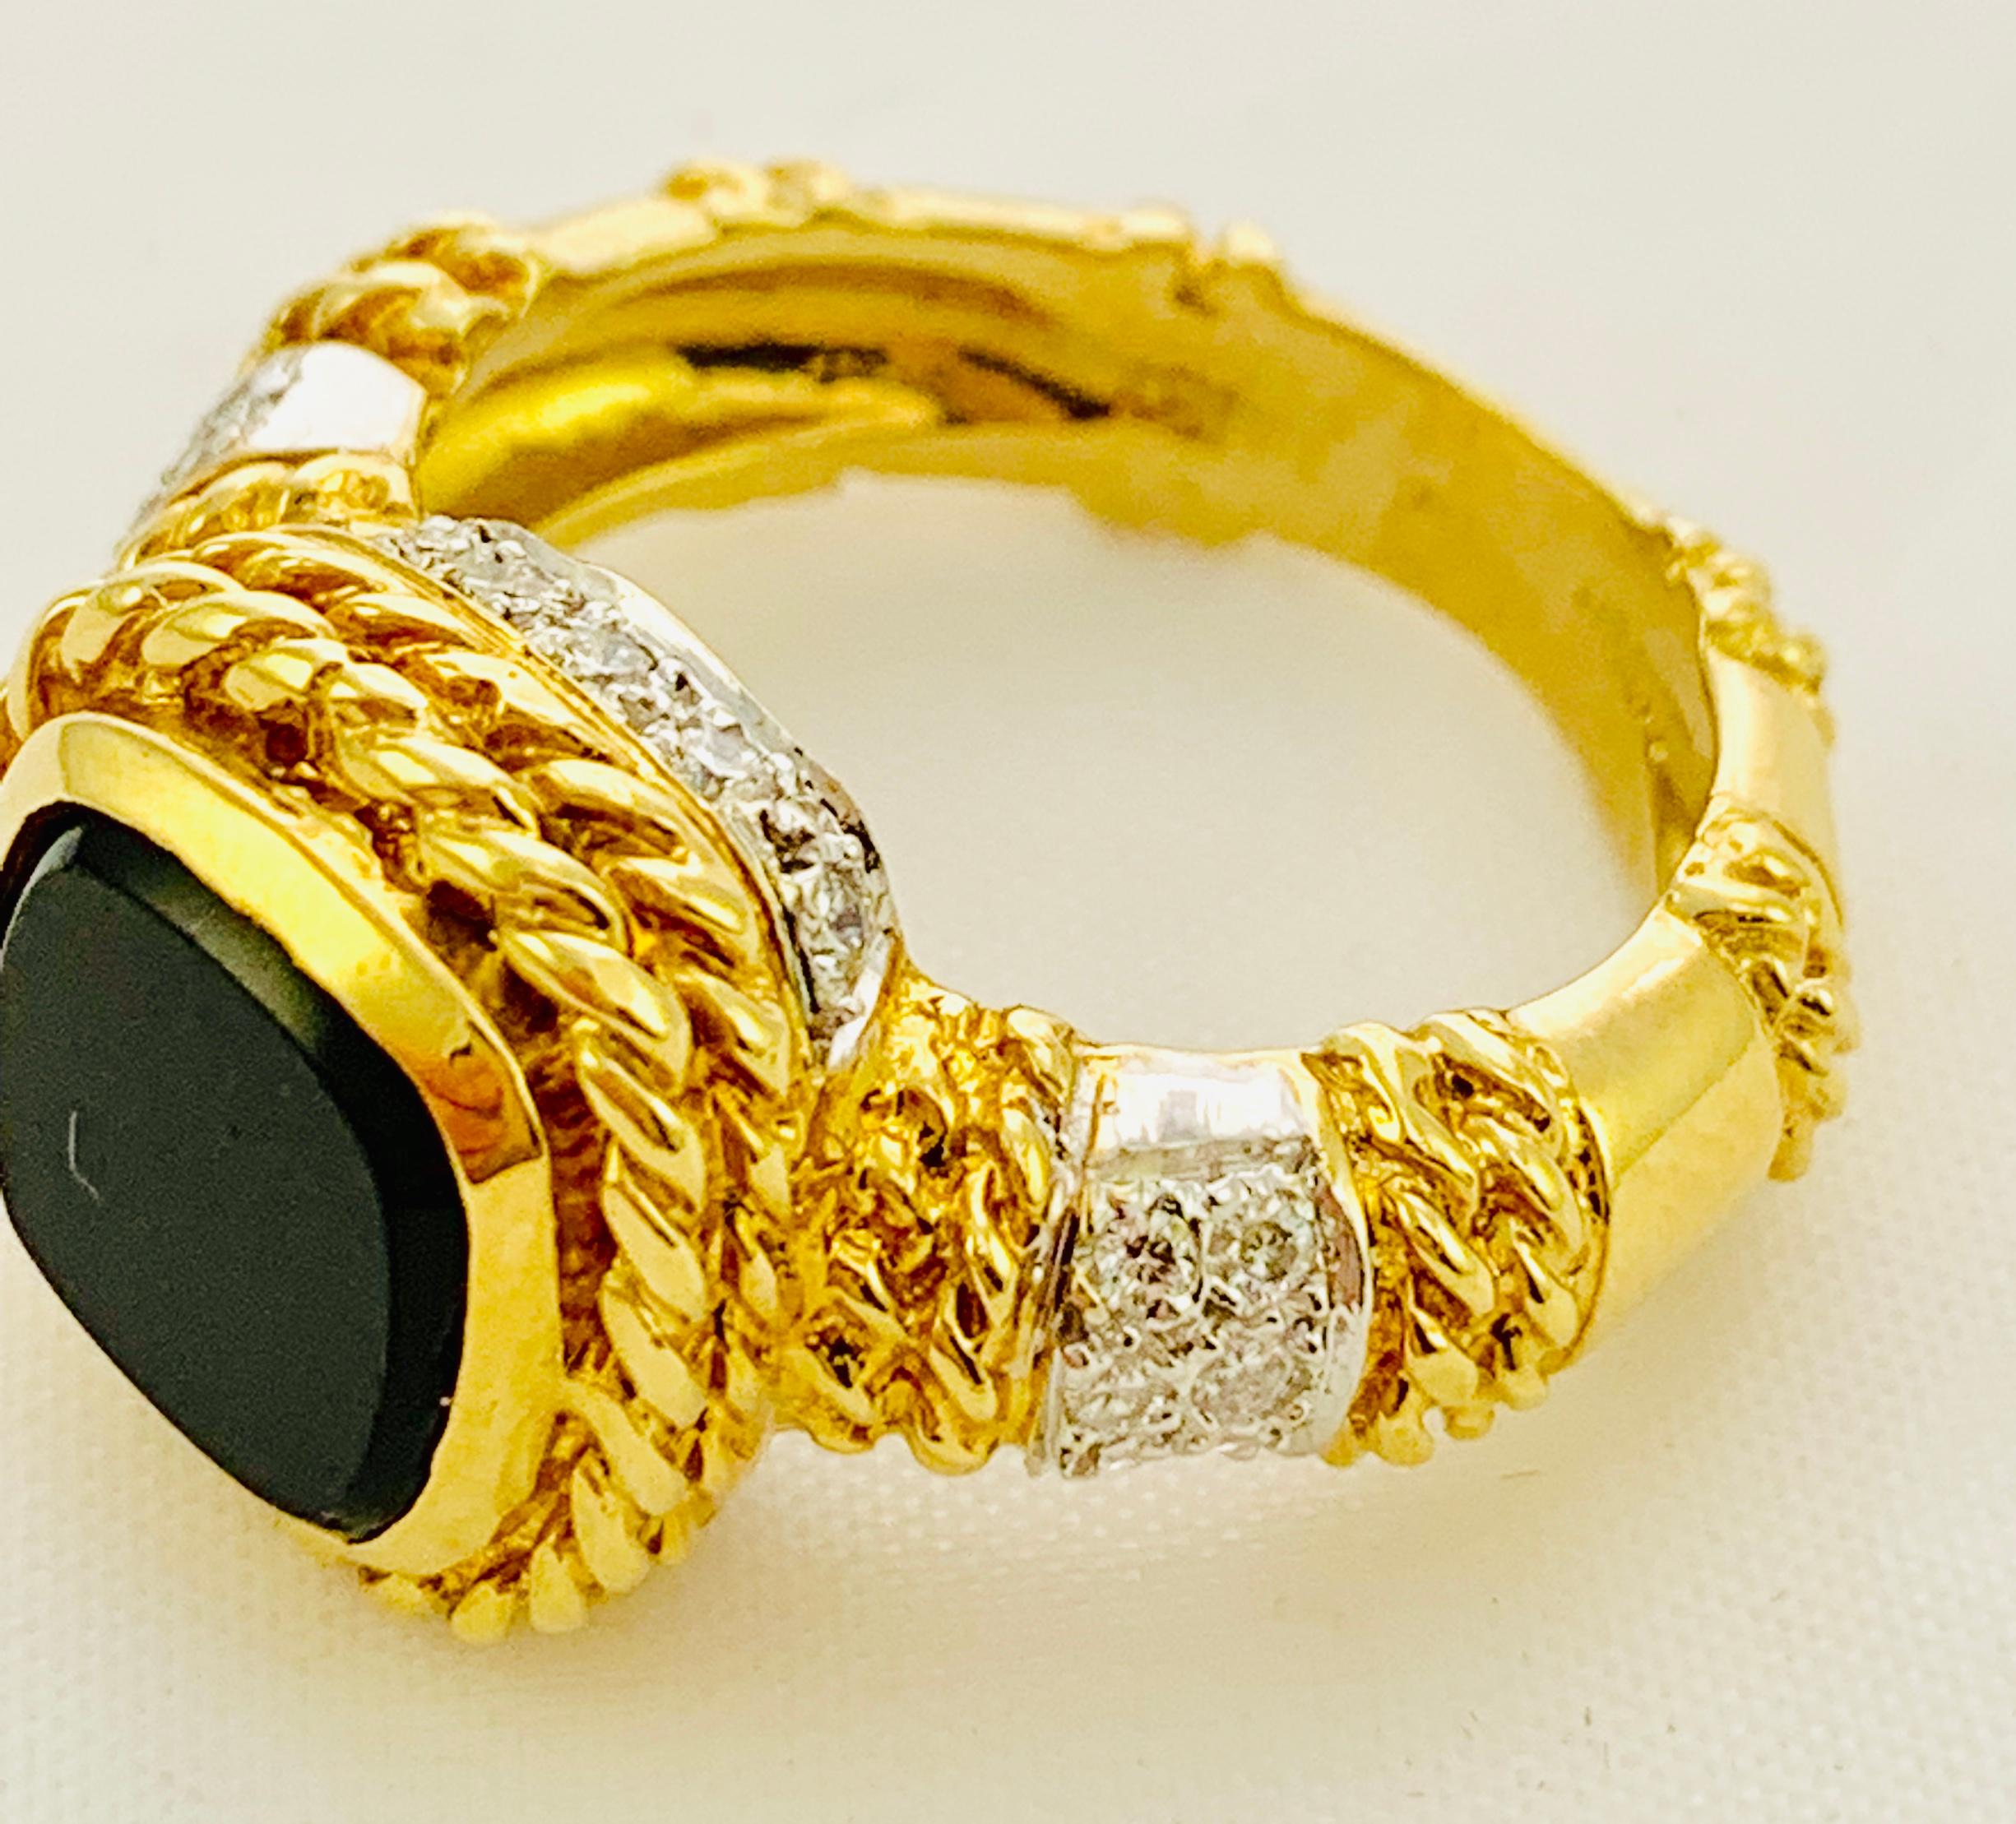 Designer Cassis 18K yellow Gold, Diamond & Onyx ladies Ring Size 5.75  4